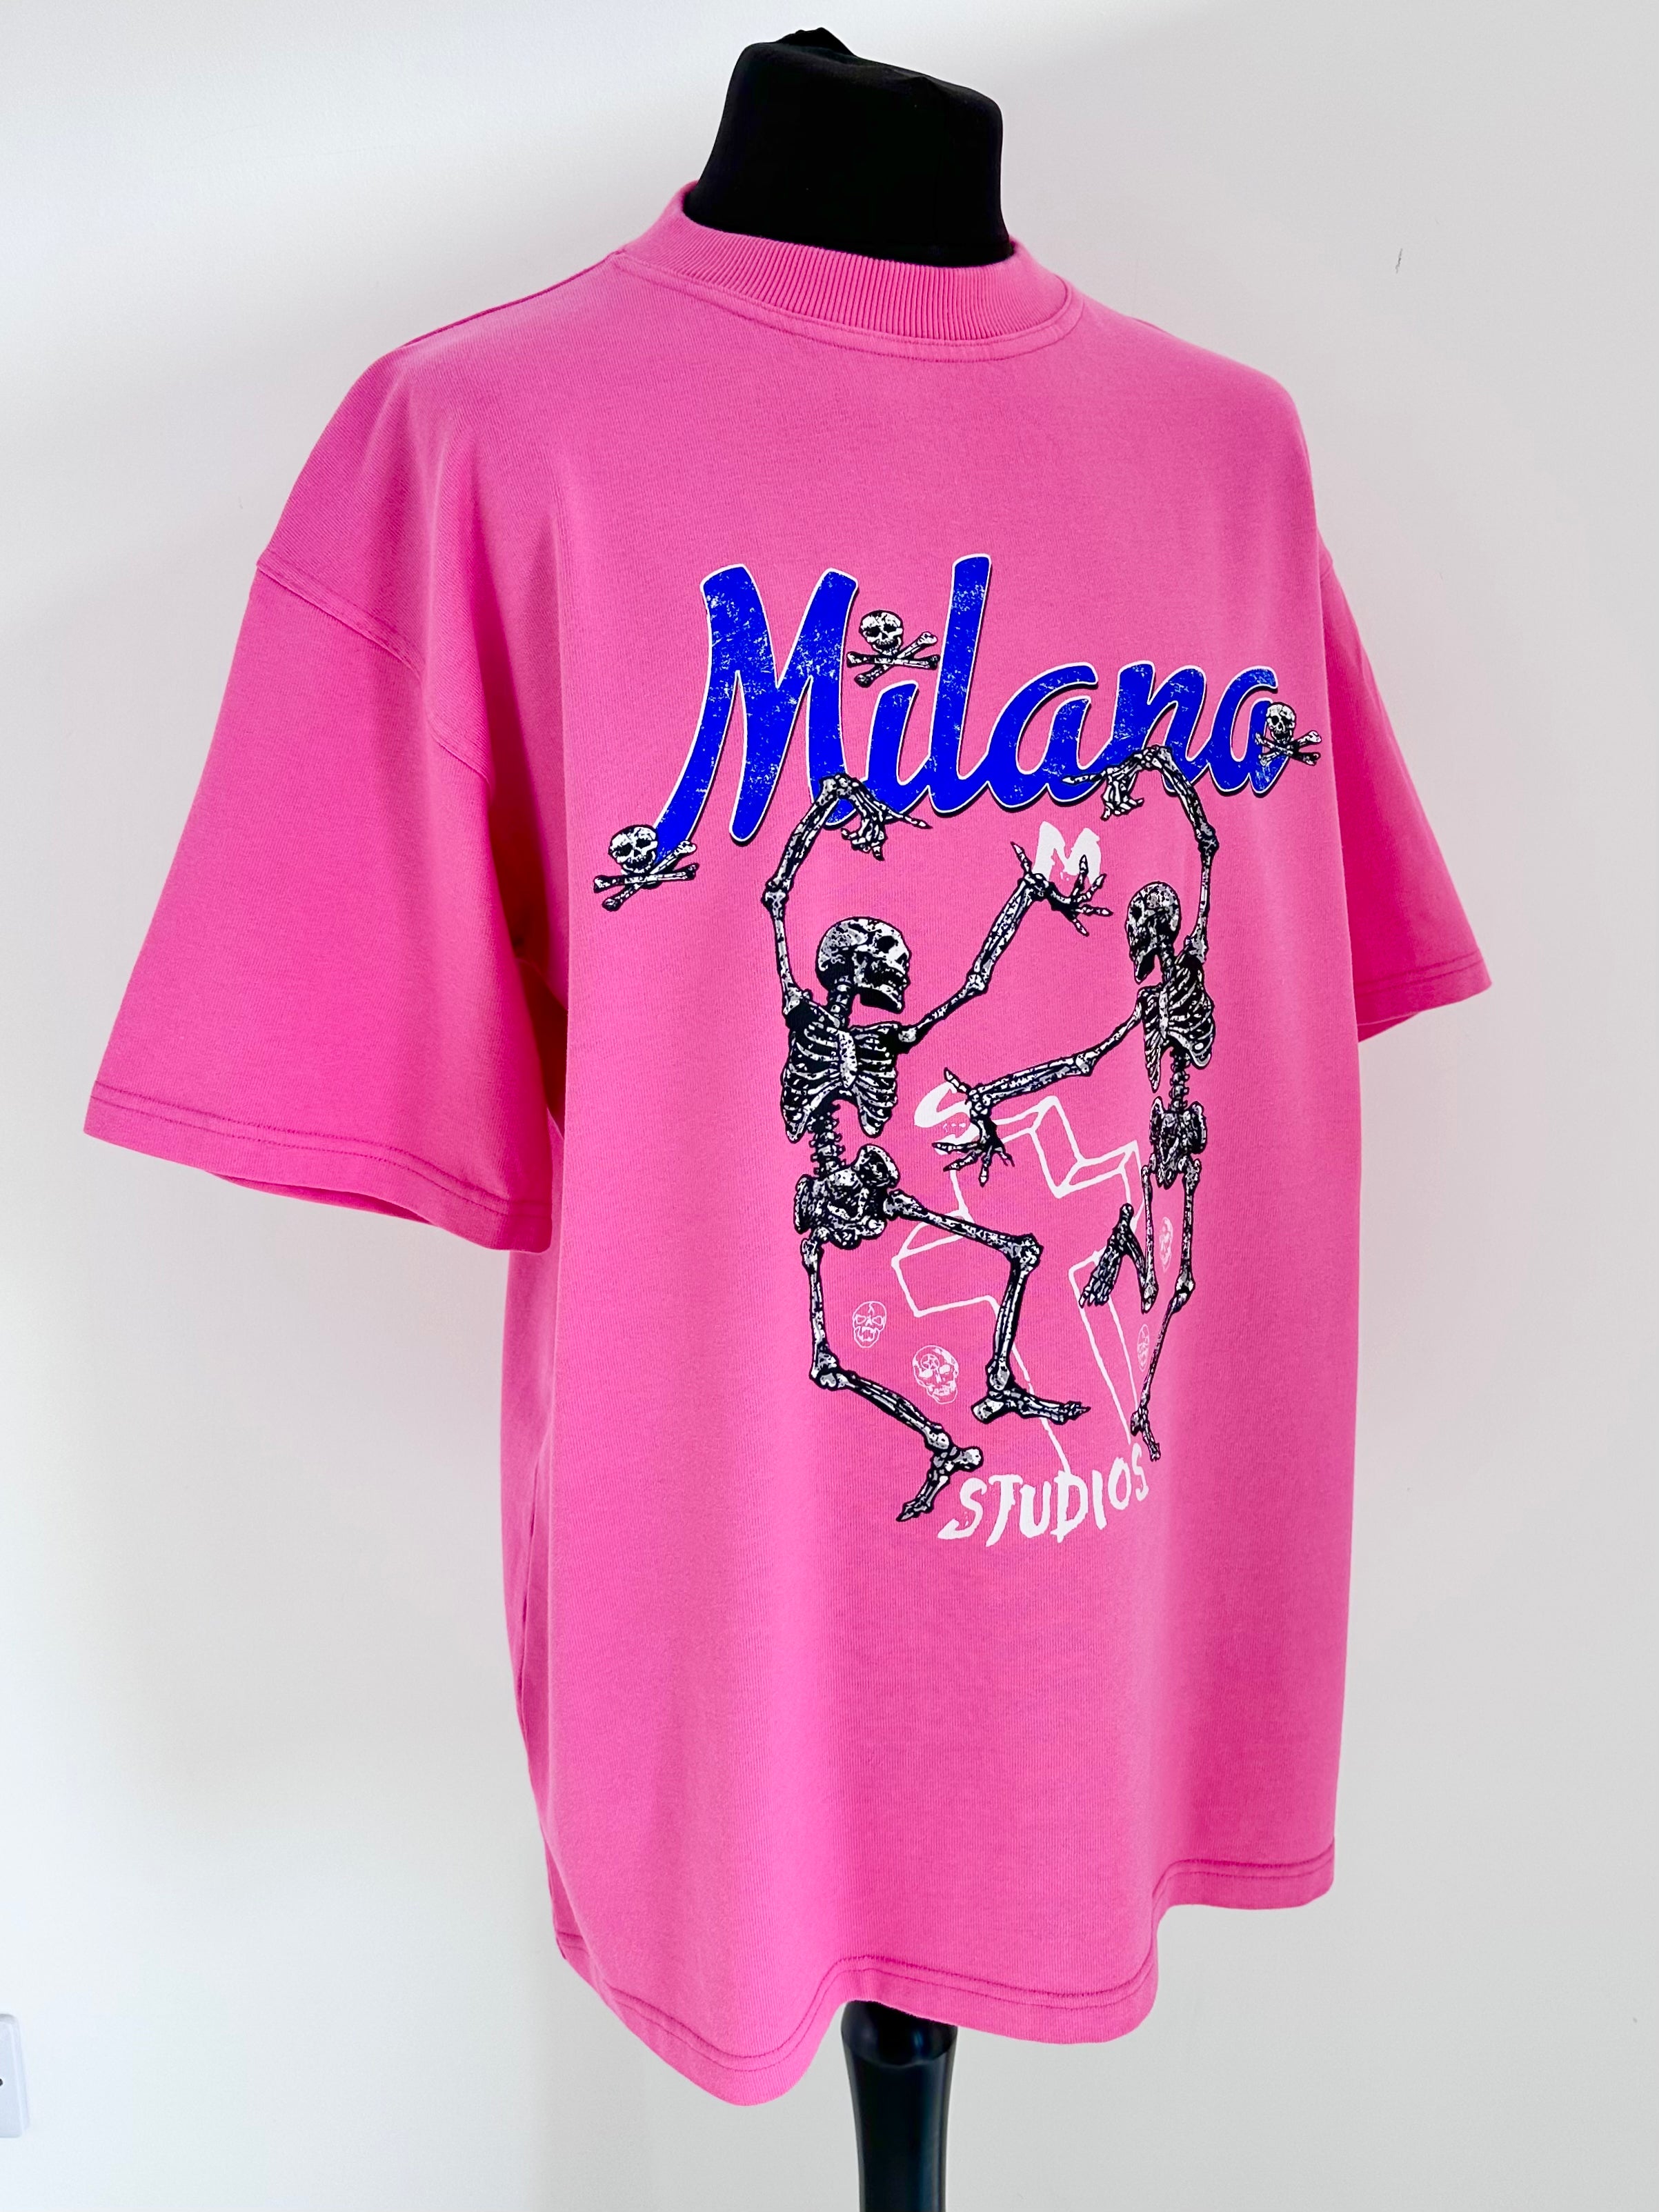 Hot Pink Skeleton Heavyweight T-shirt.